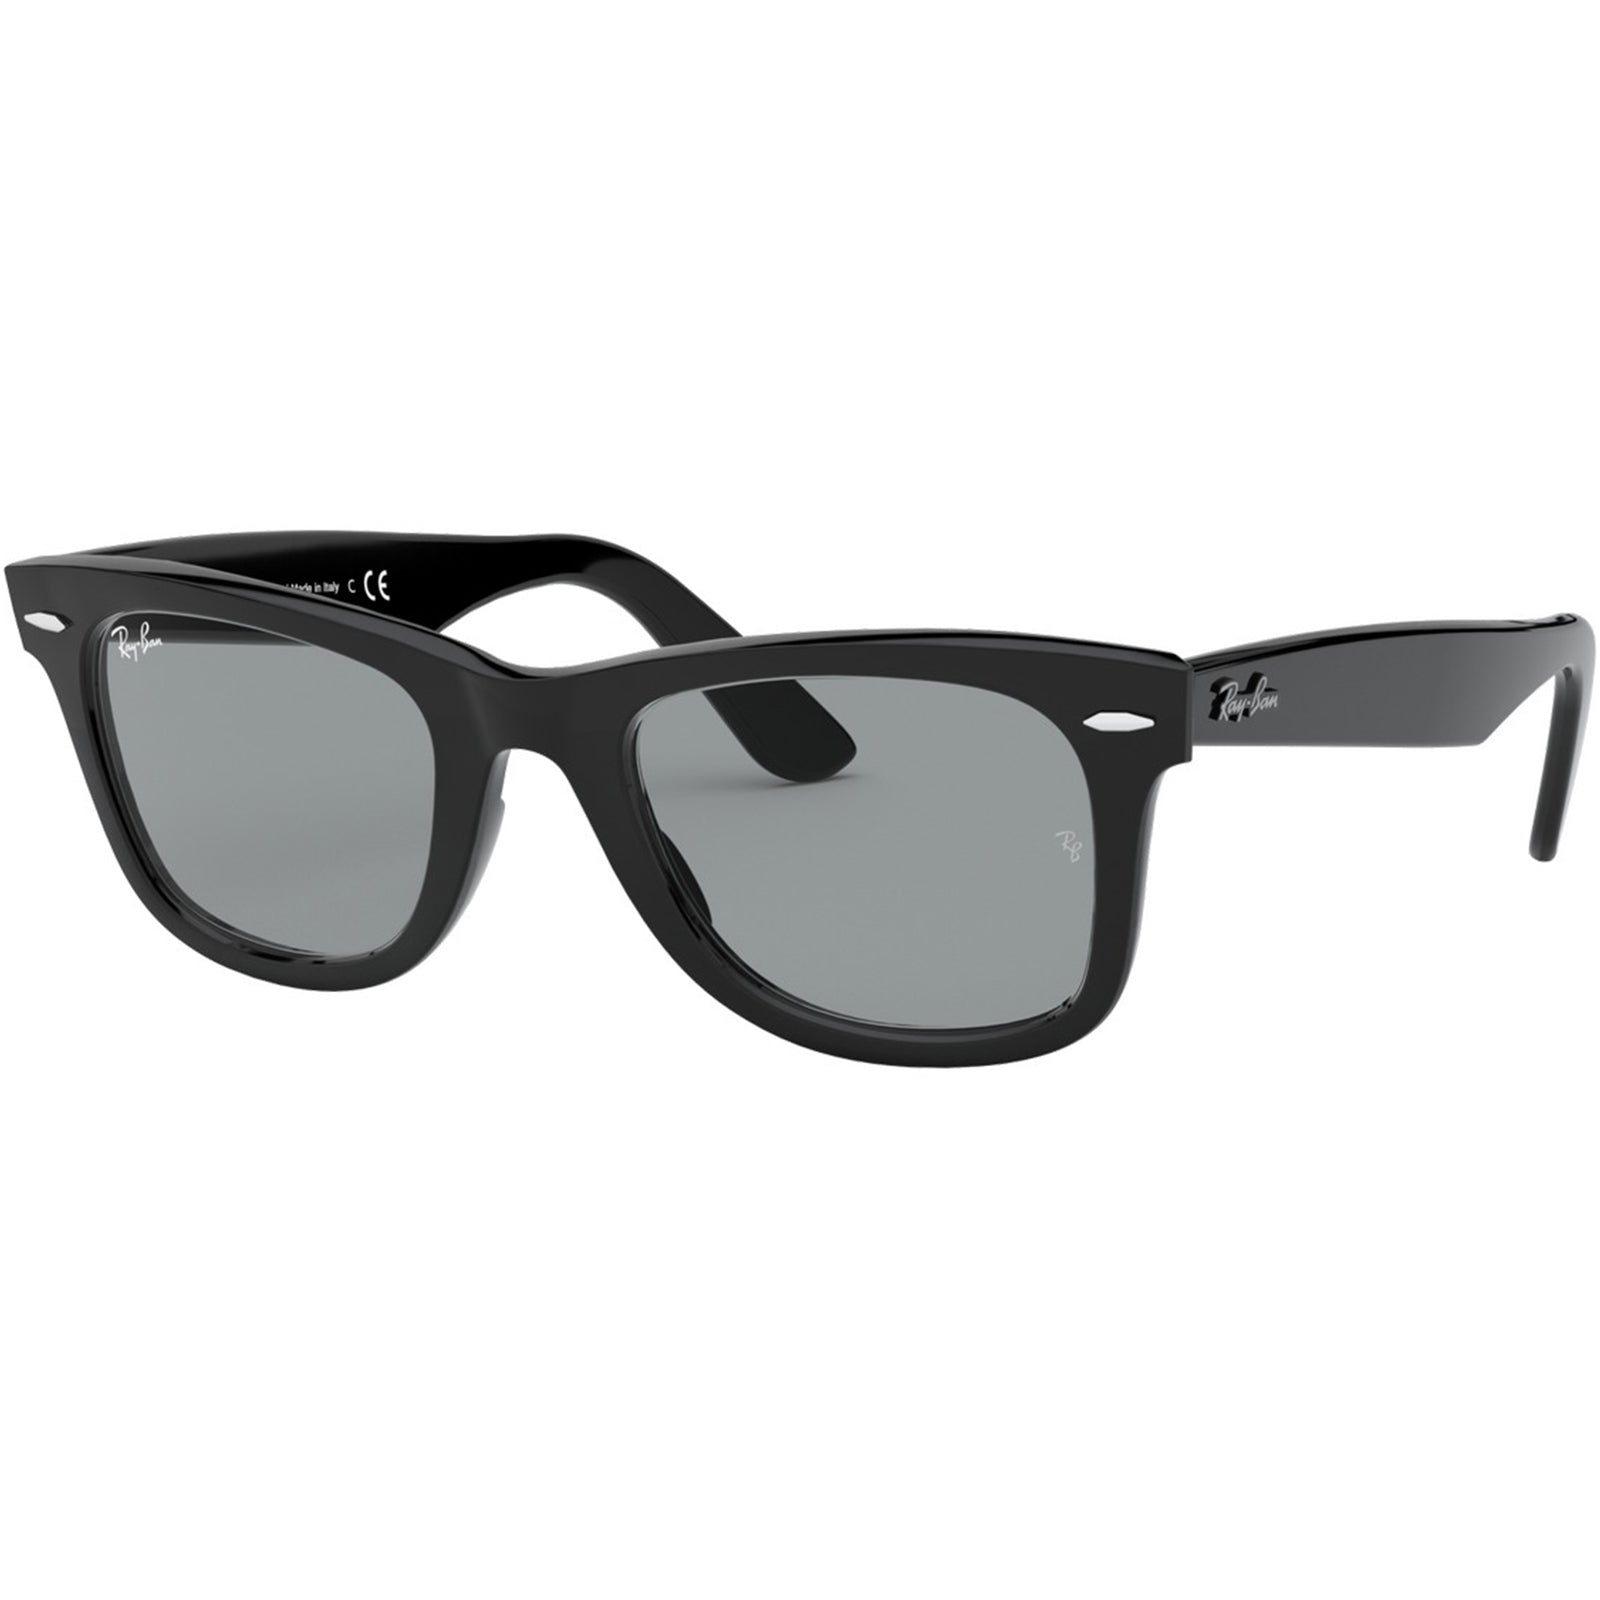 Ray-Ban Original Wayfarer Washed Lenses Adult Lifestyle Sunglasses-0RB2140F